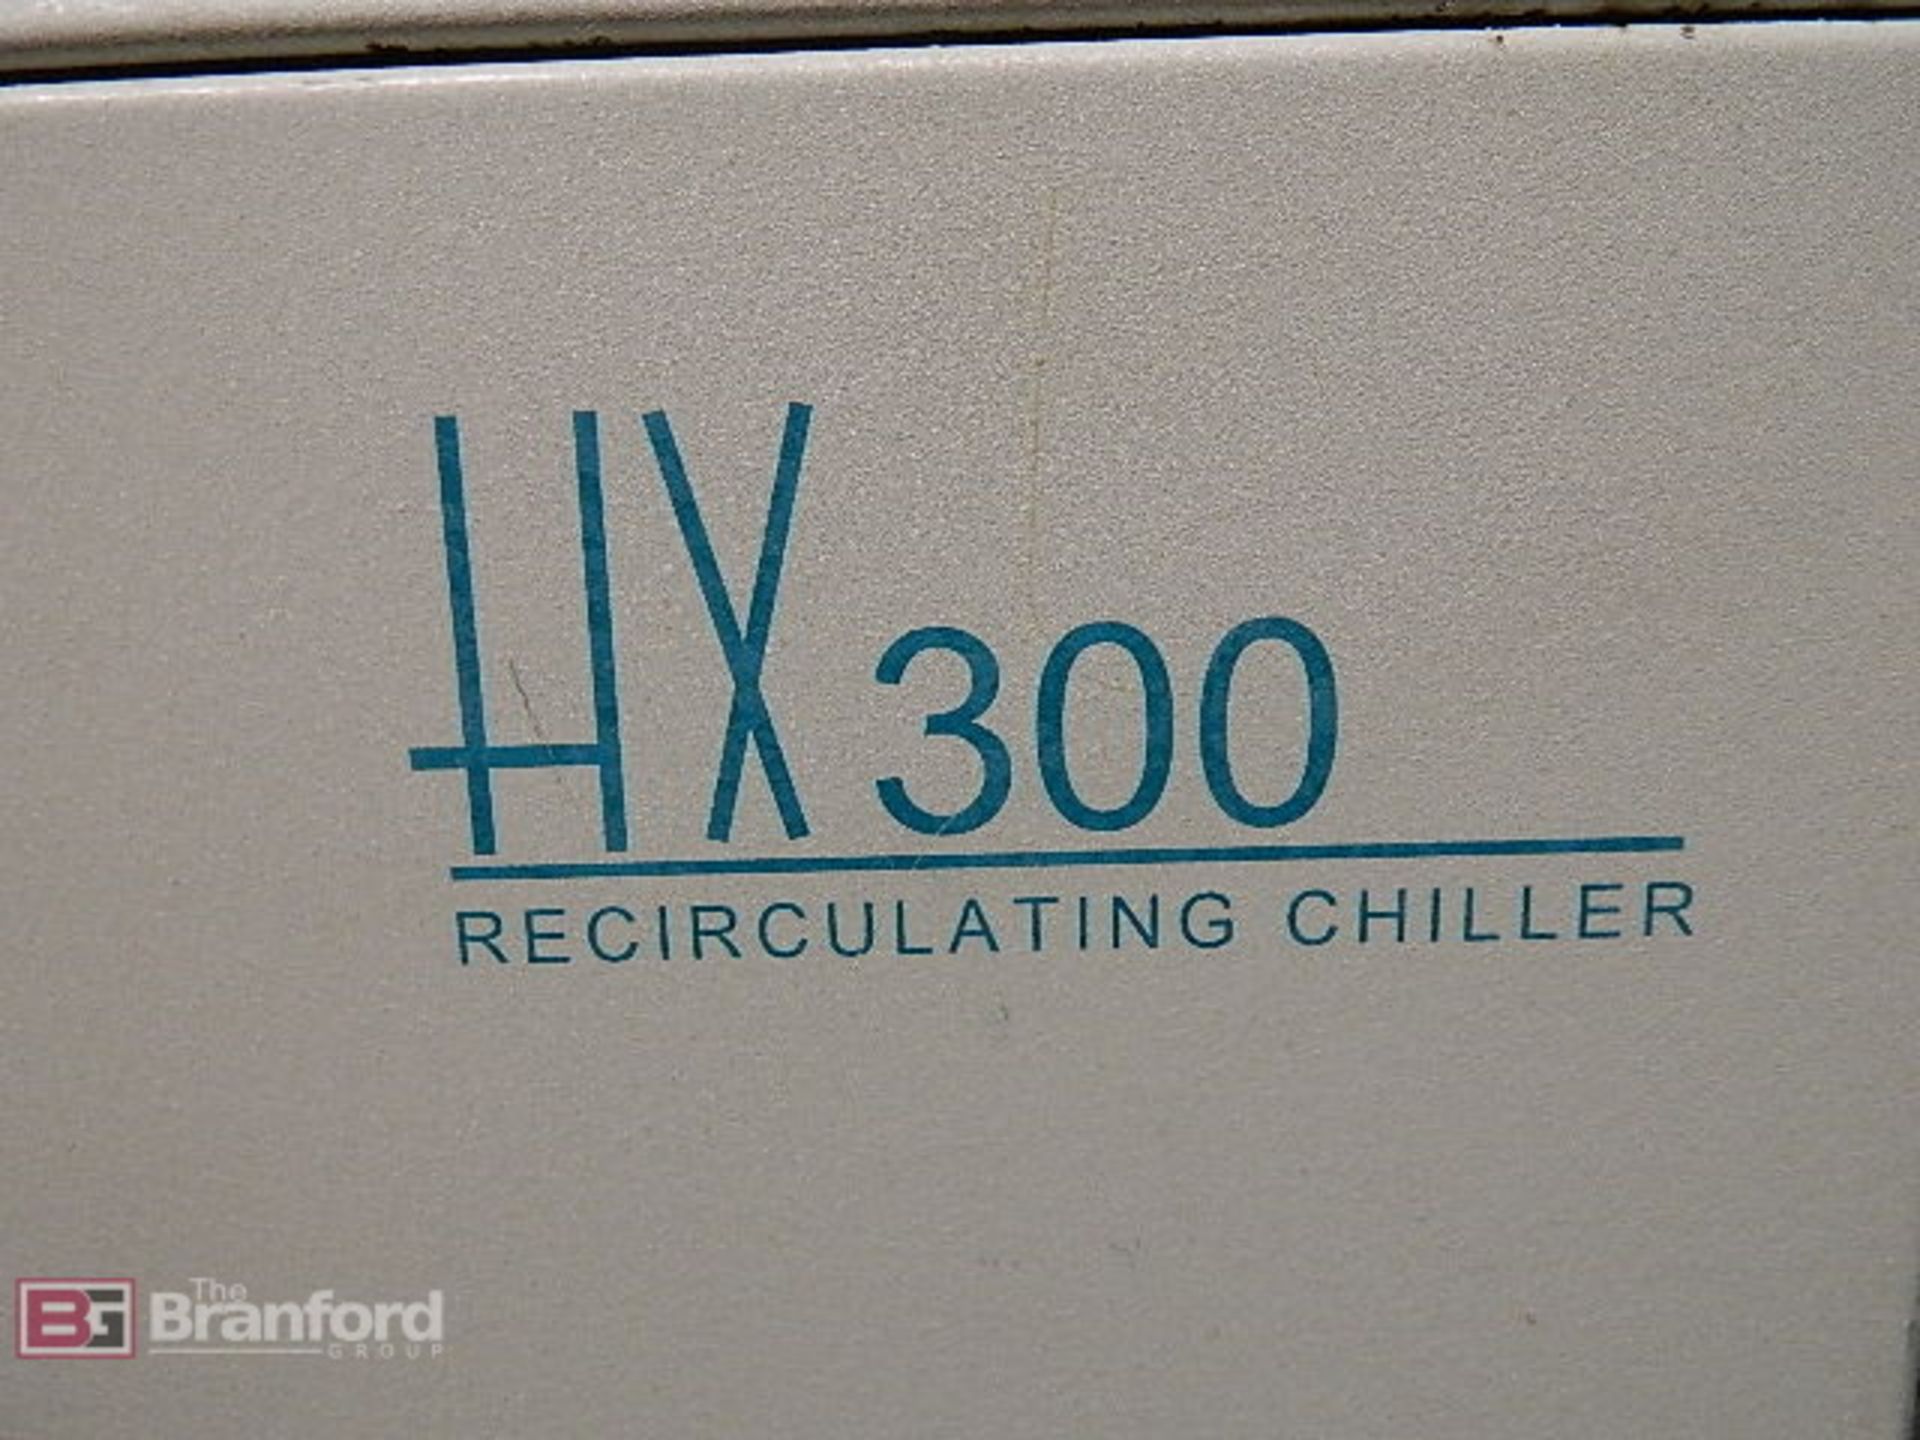 Neslab Recirculating Chiller, m/n HX300 - Image 2 of 4